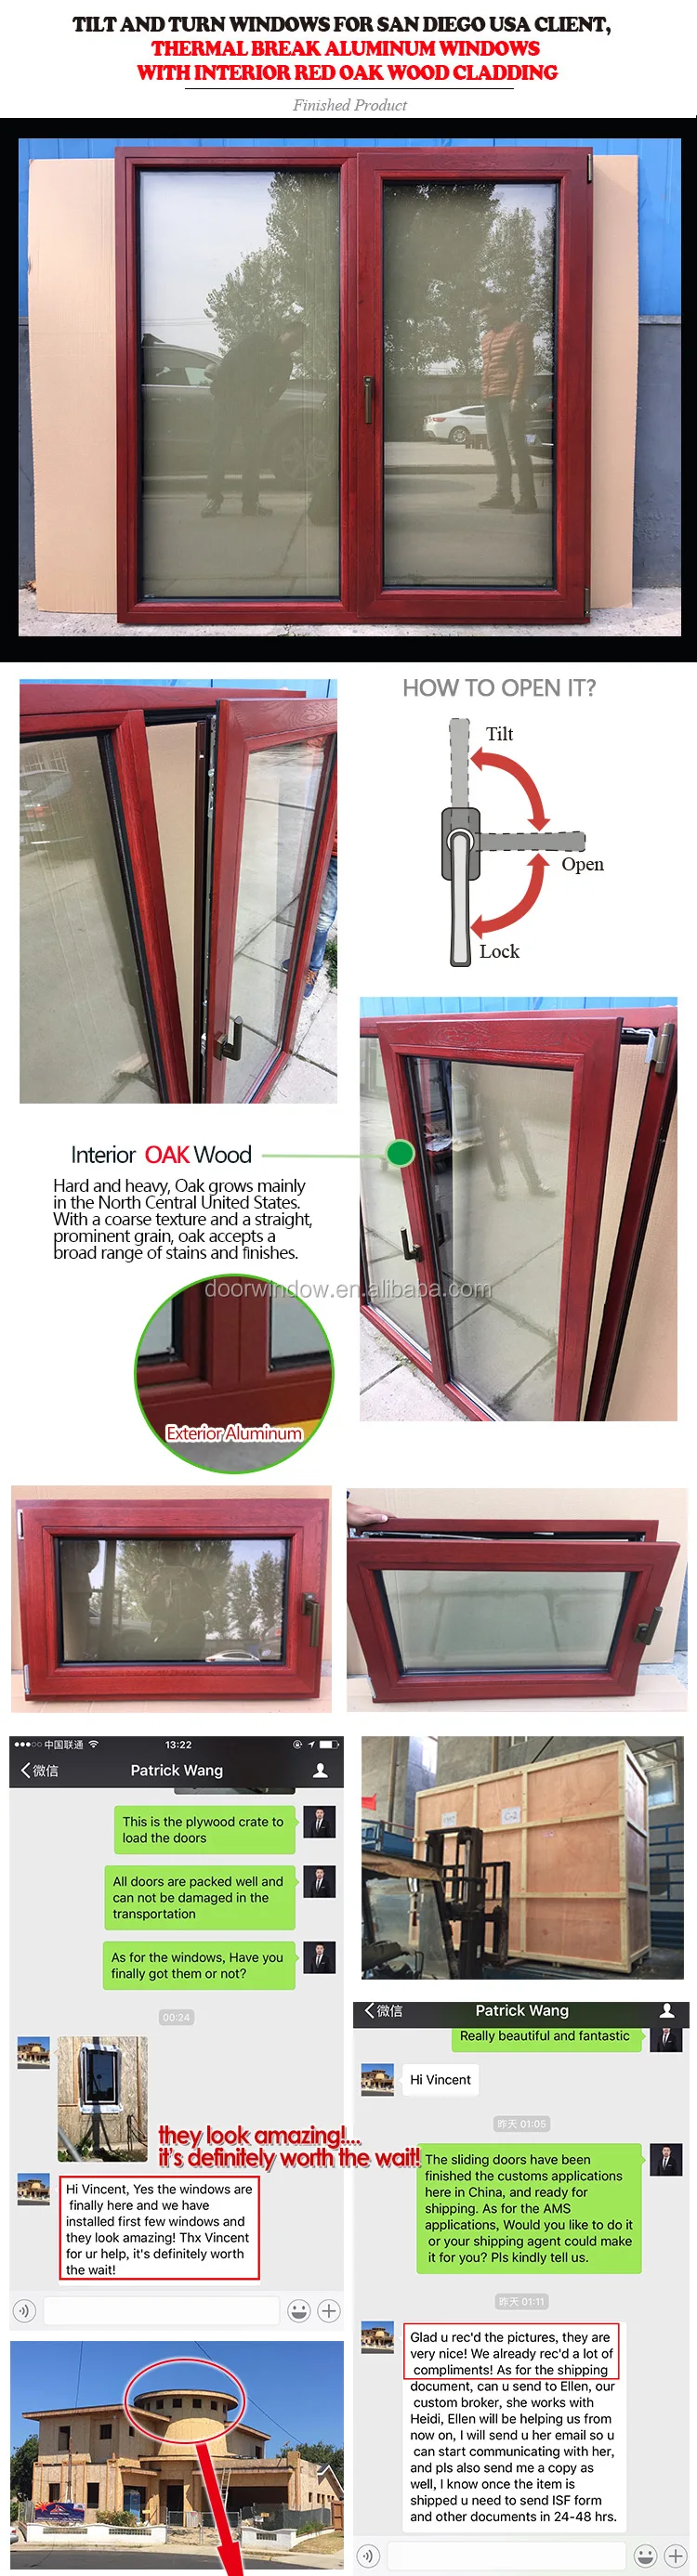 Puertas de seguridad owning window old wood windows for sale